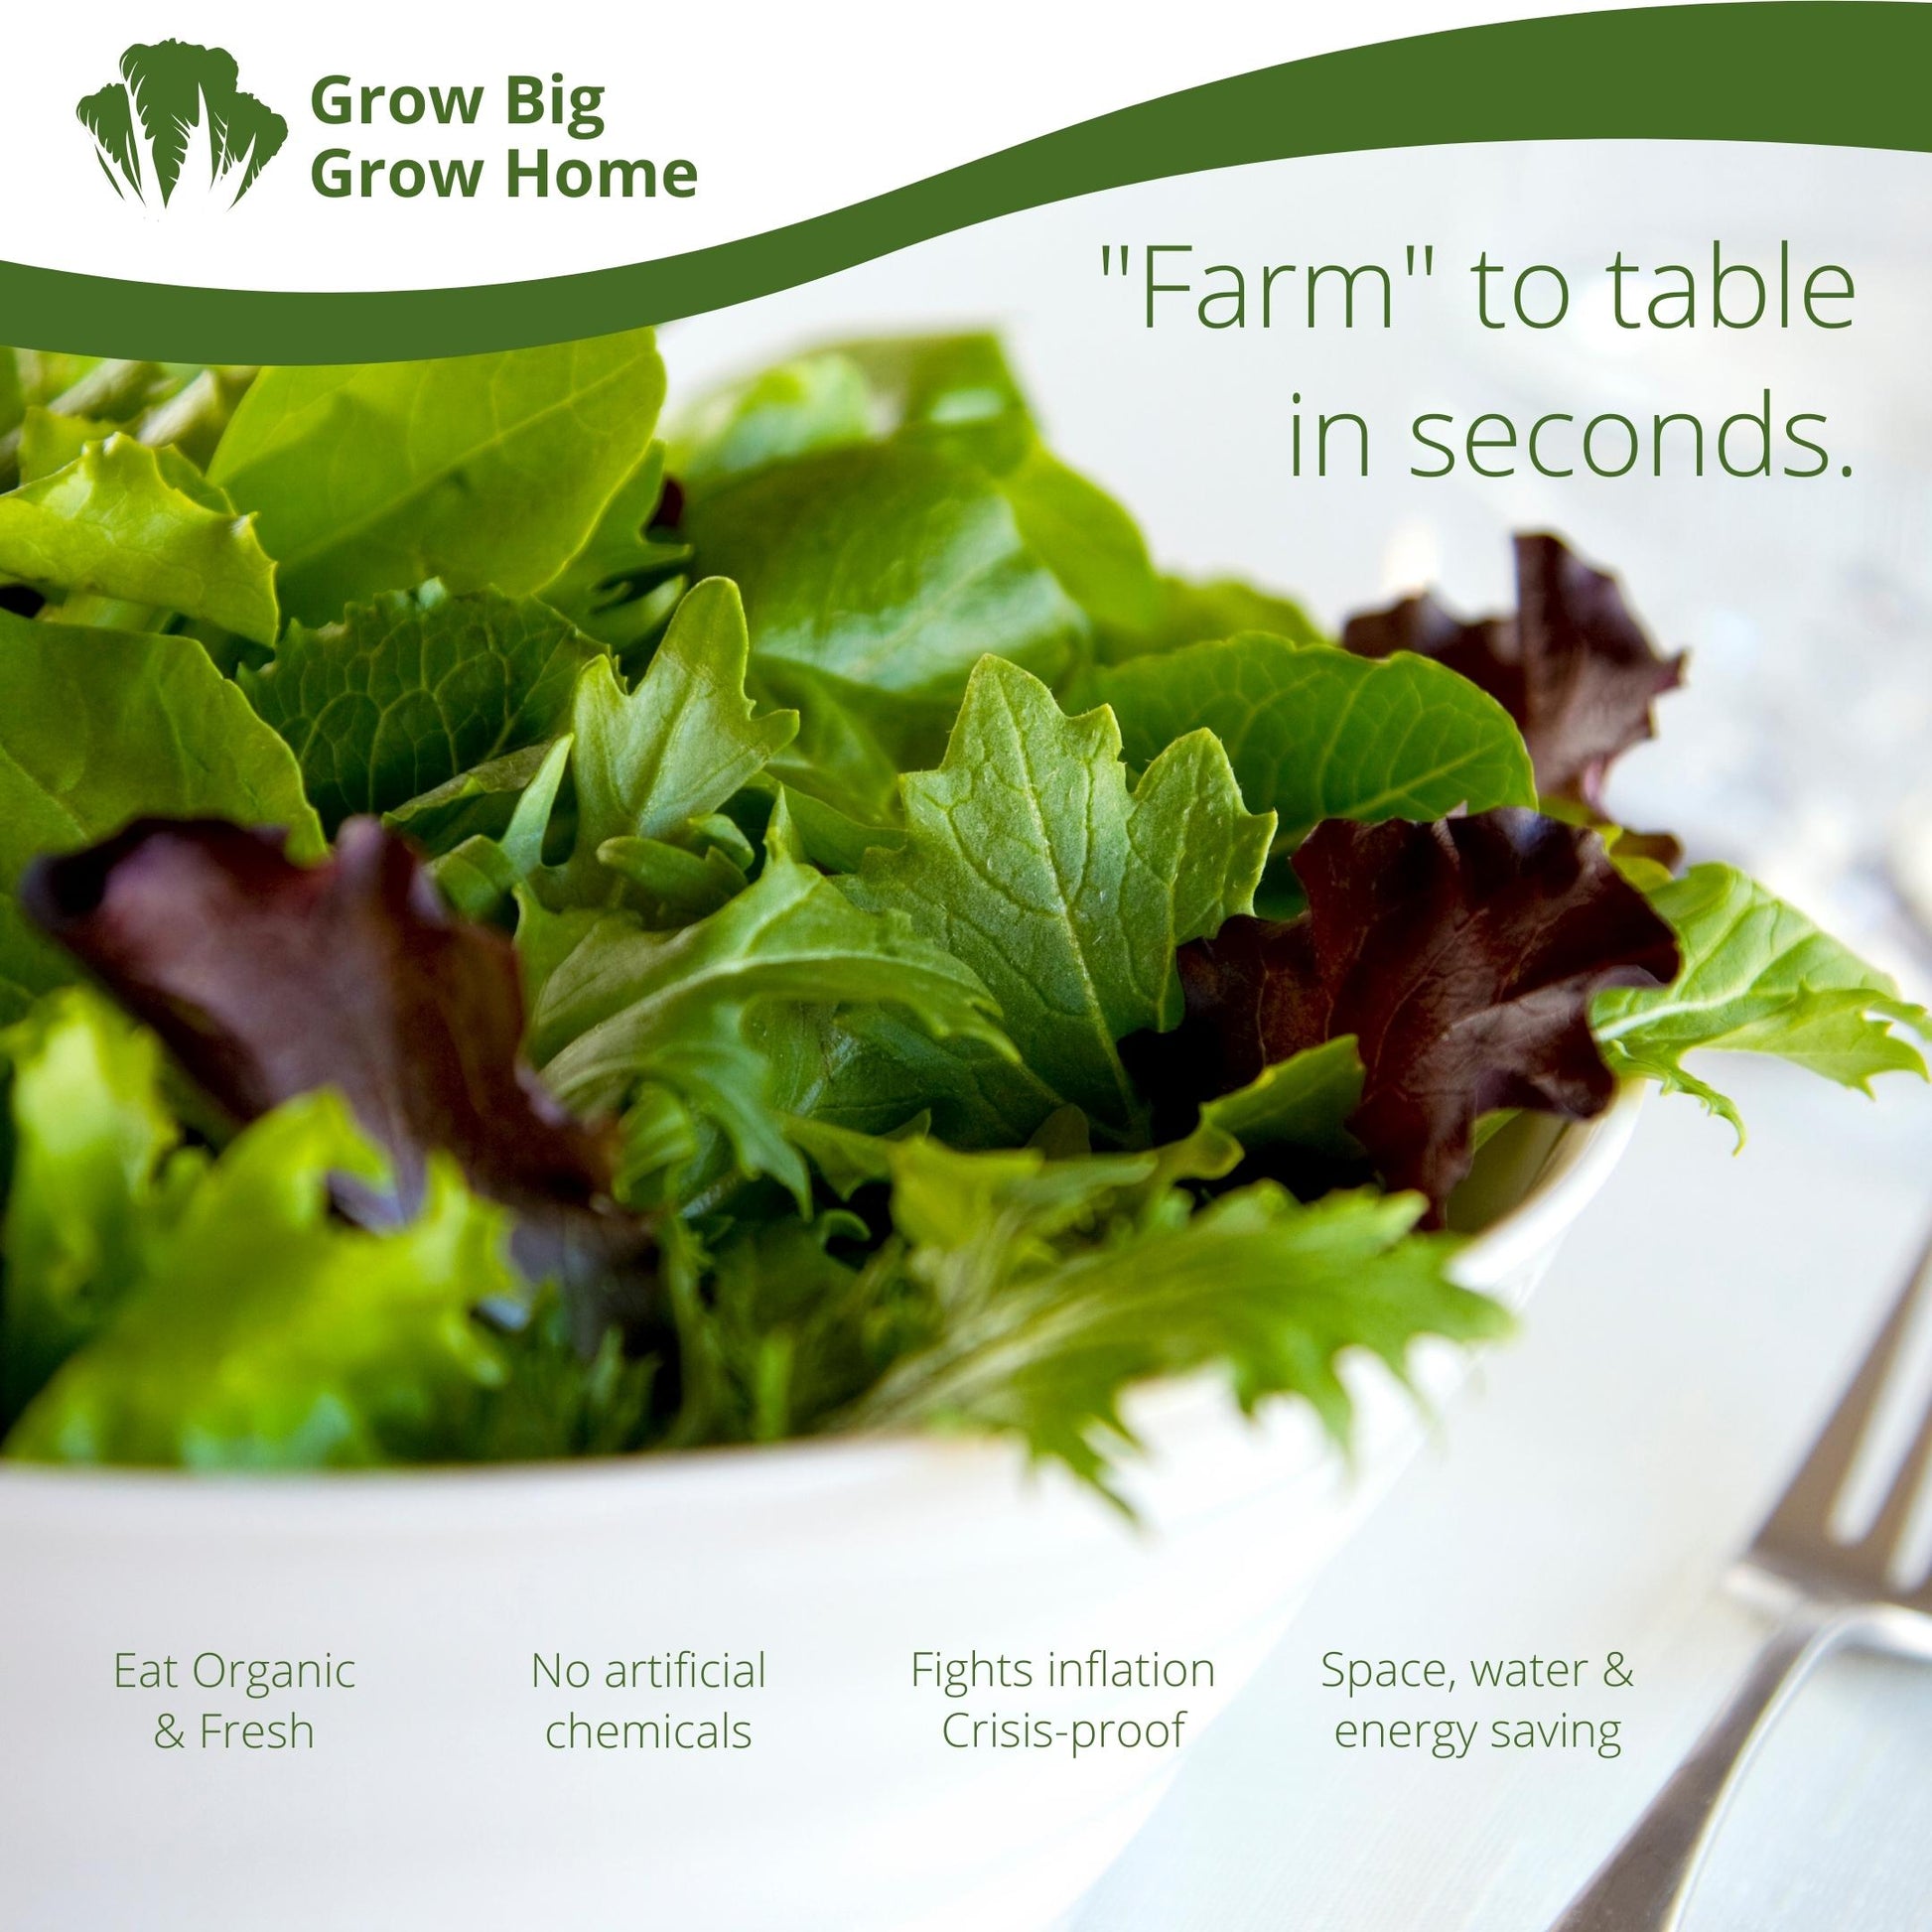 Grow organic salad greens & enjoy the farm-to-table experience